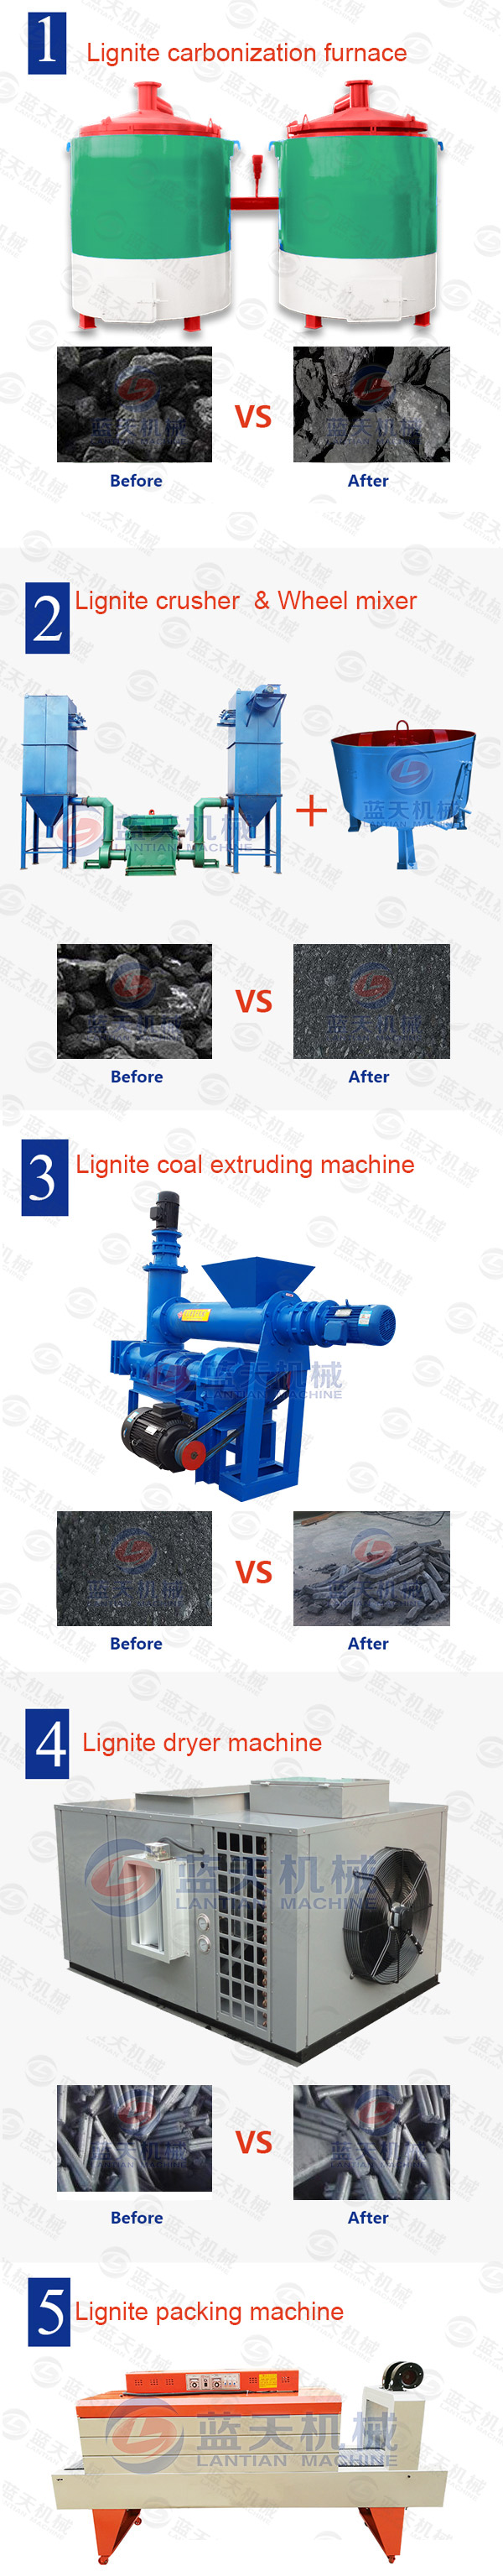 Lignite Coal Extruding Machine Production Line